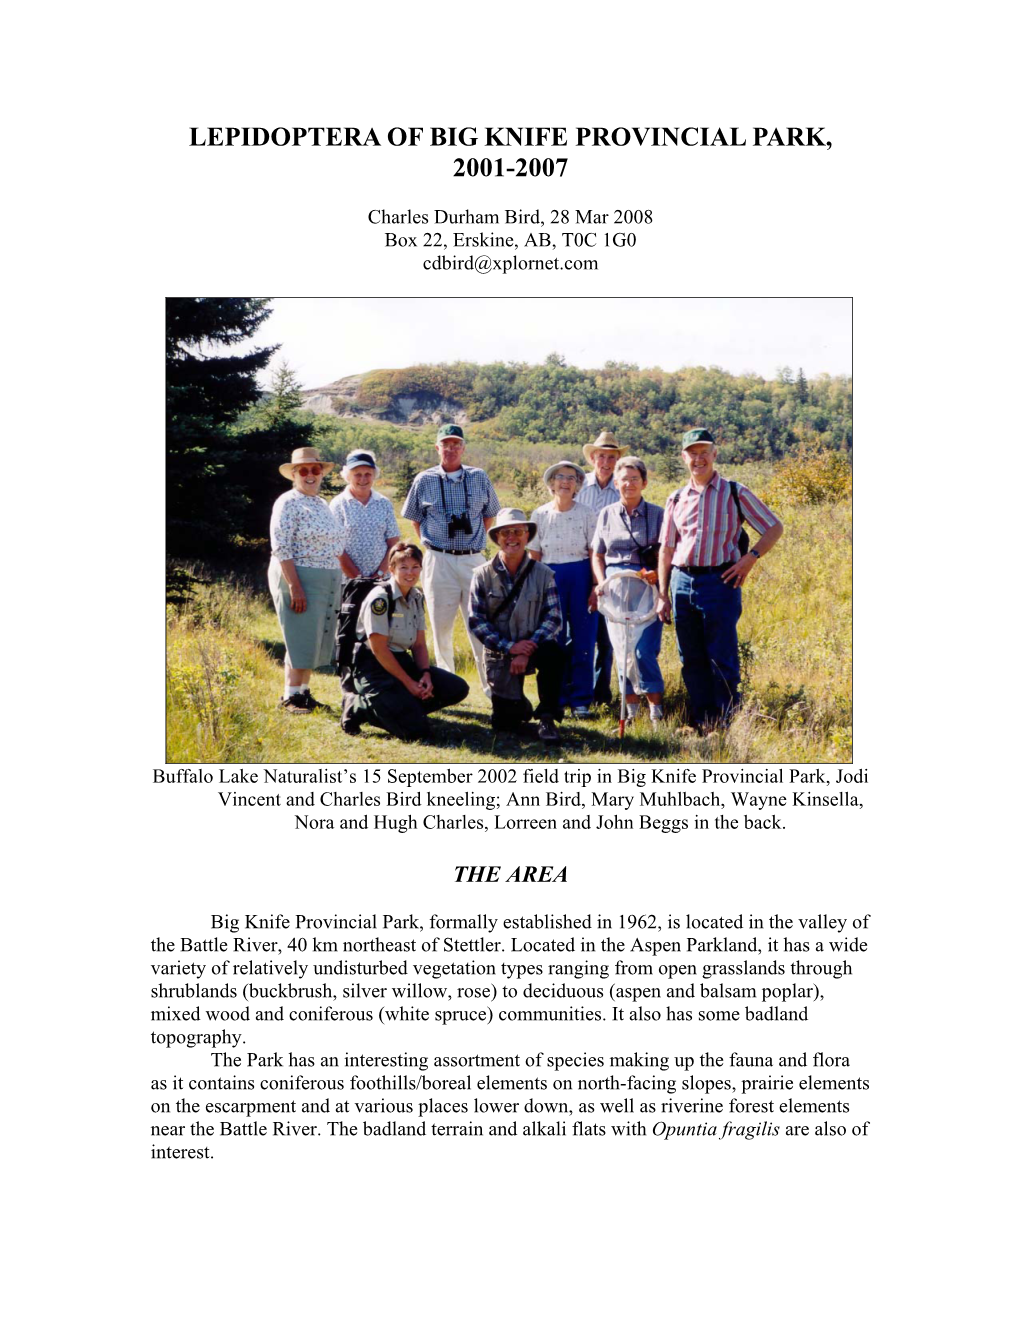 Lepidoptera of Big Knife Provincial Park (2001-2007)